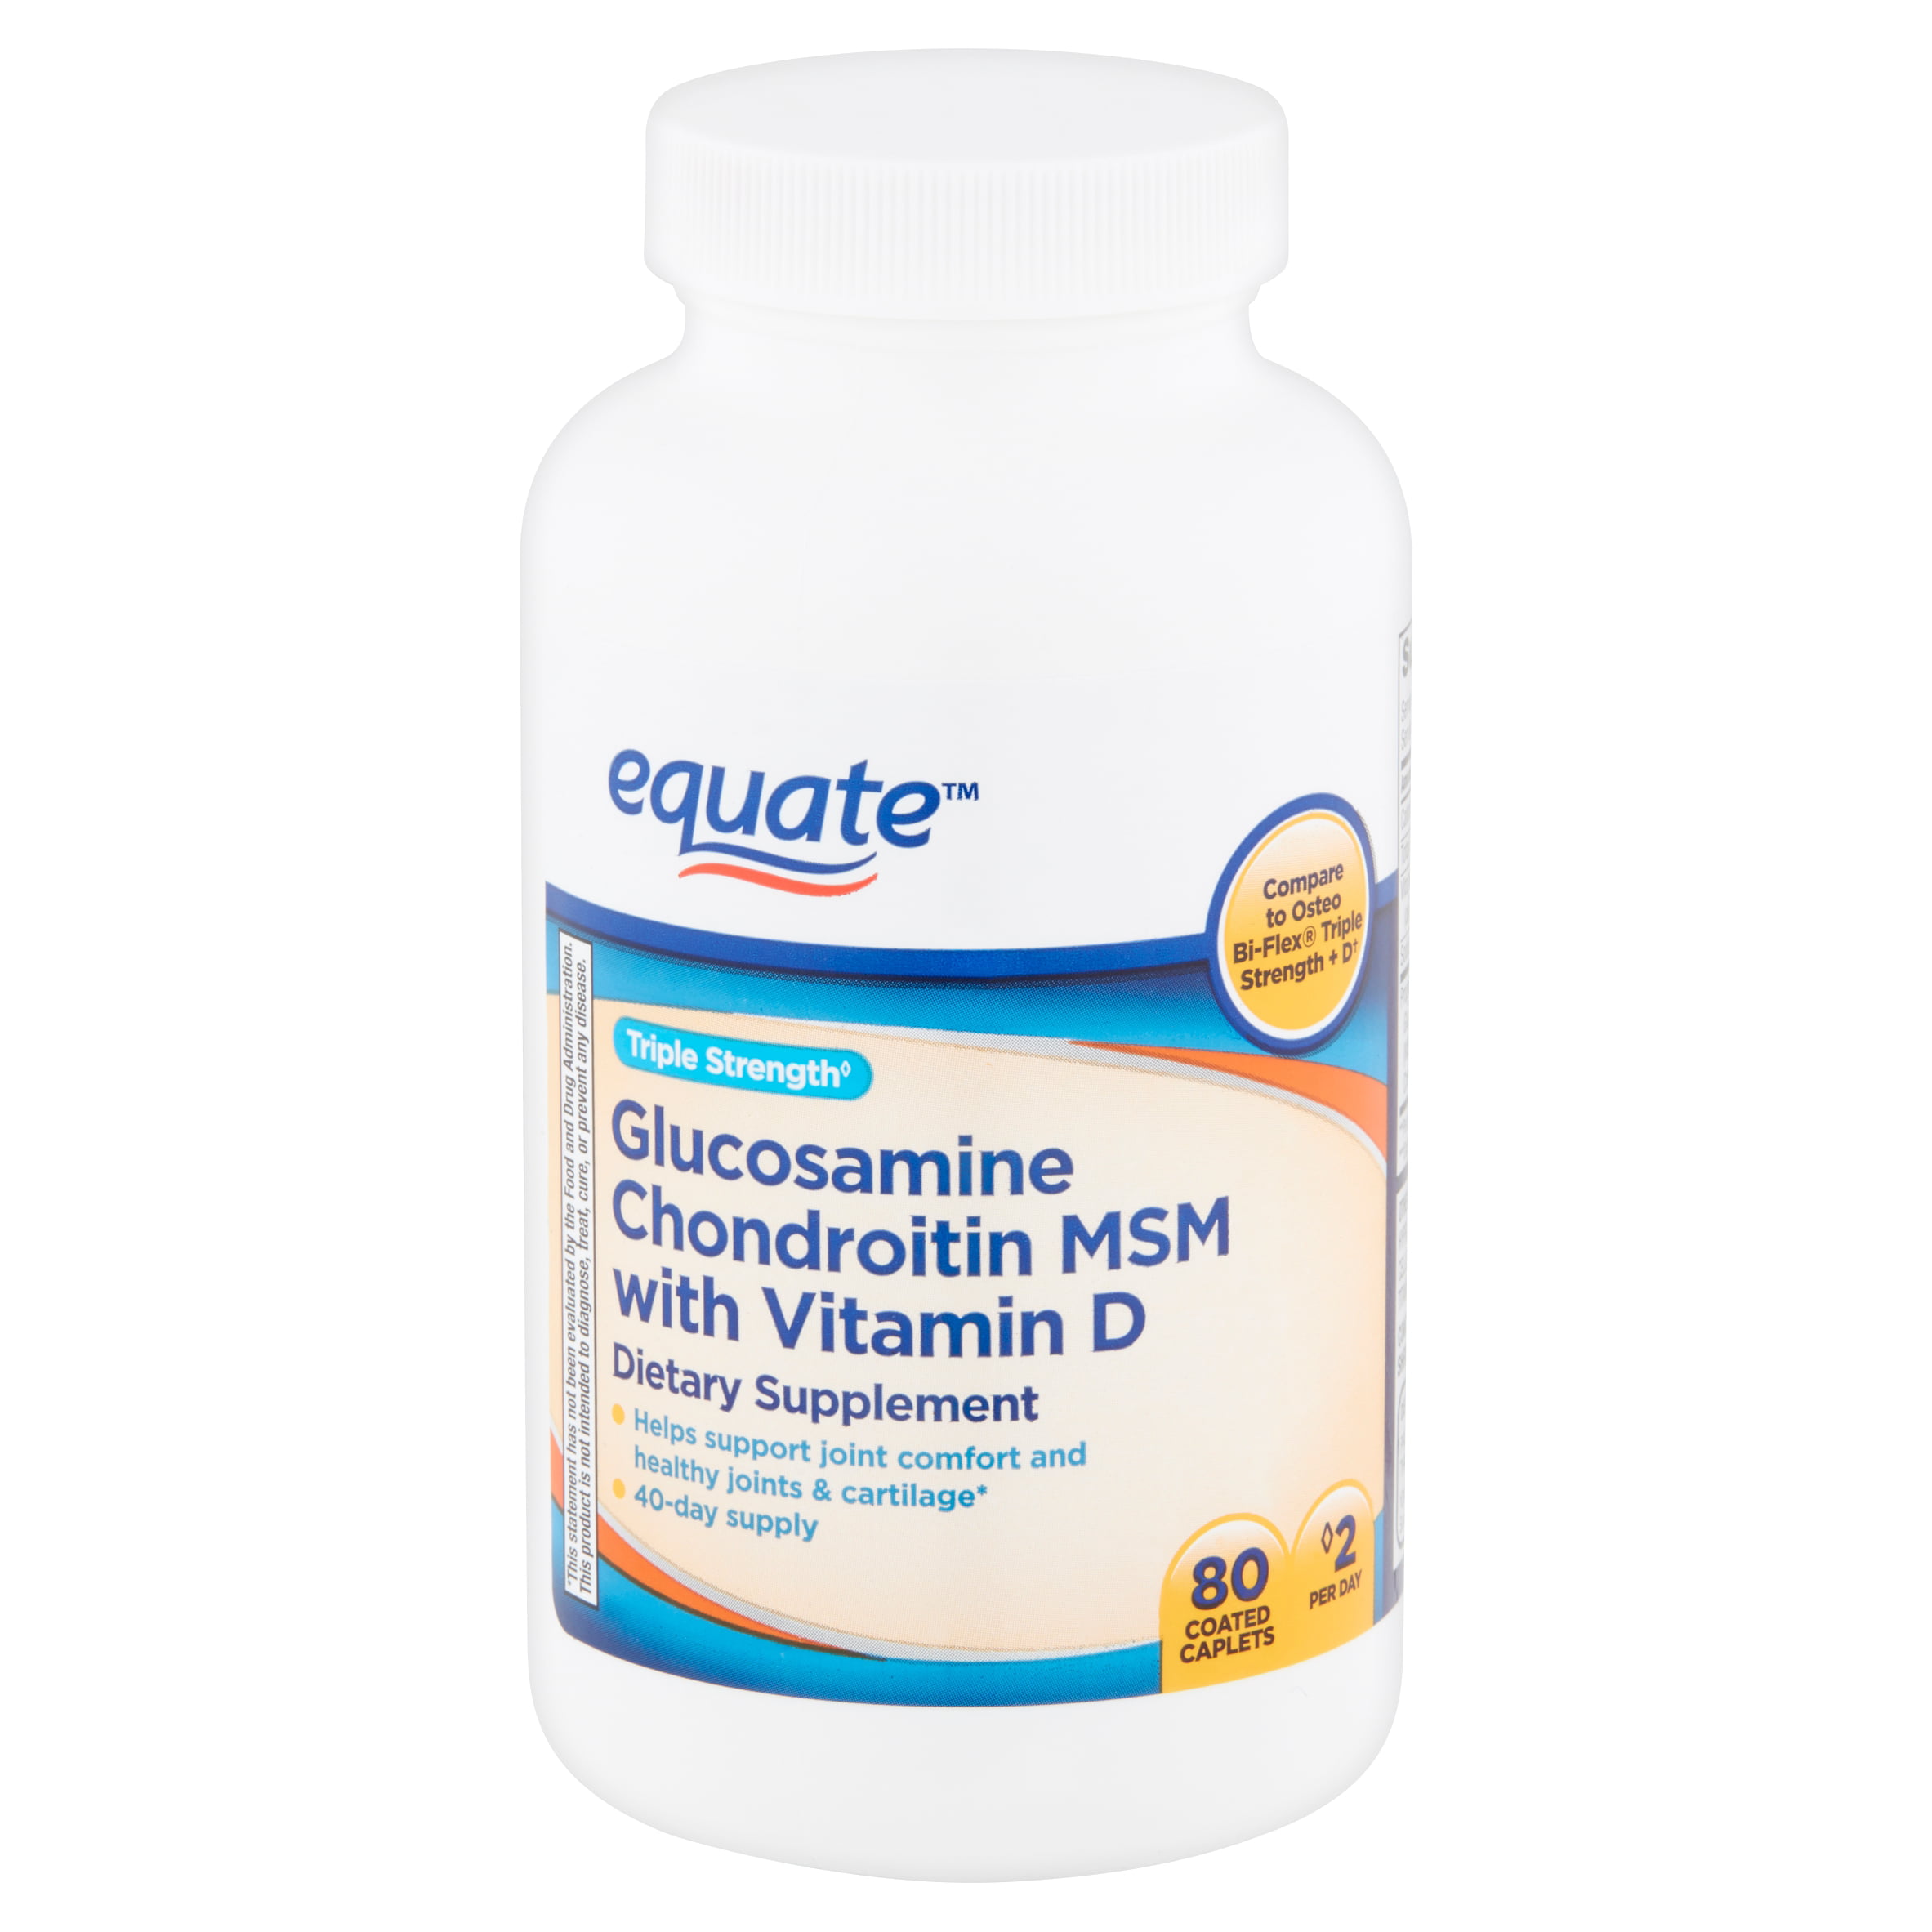 Equate Glucosamine Chondroitin MSM + Vitamin D Coated 